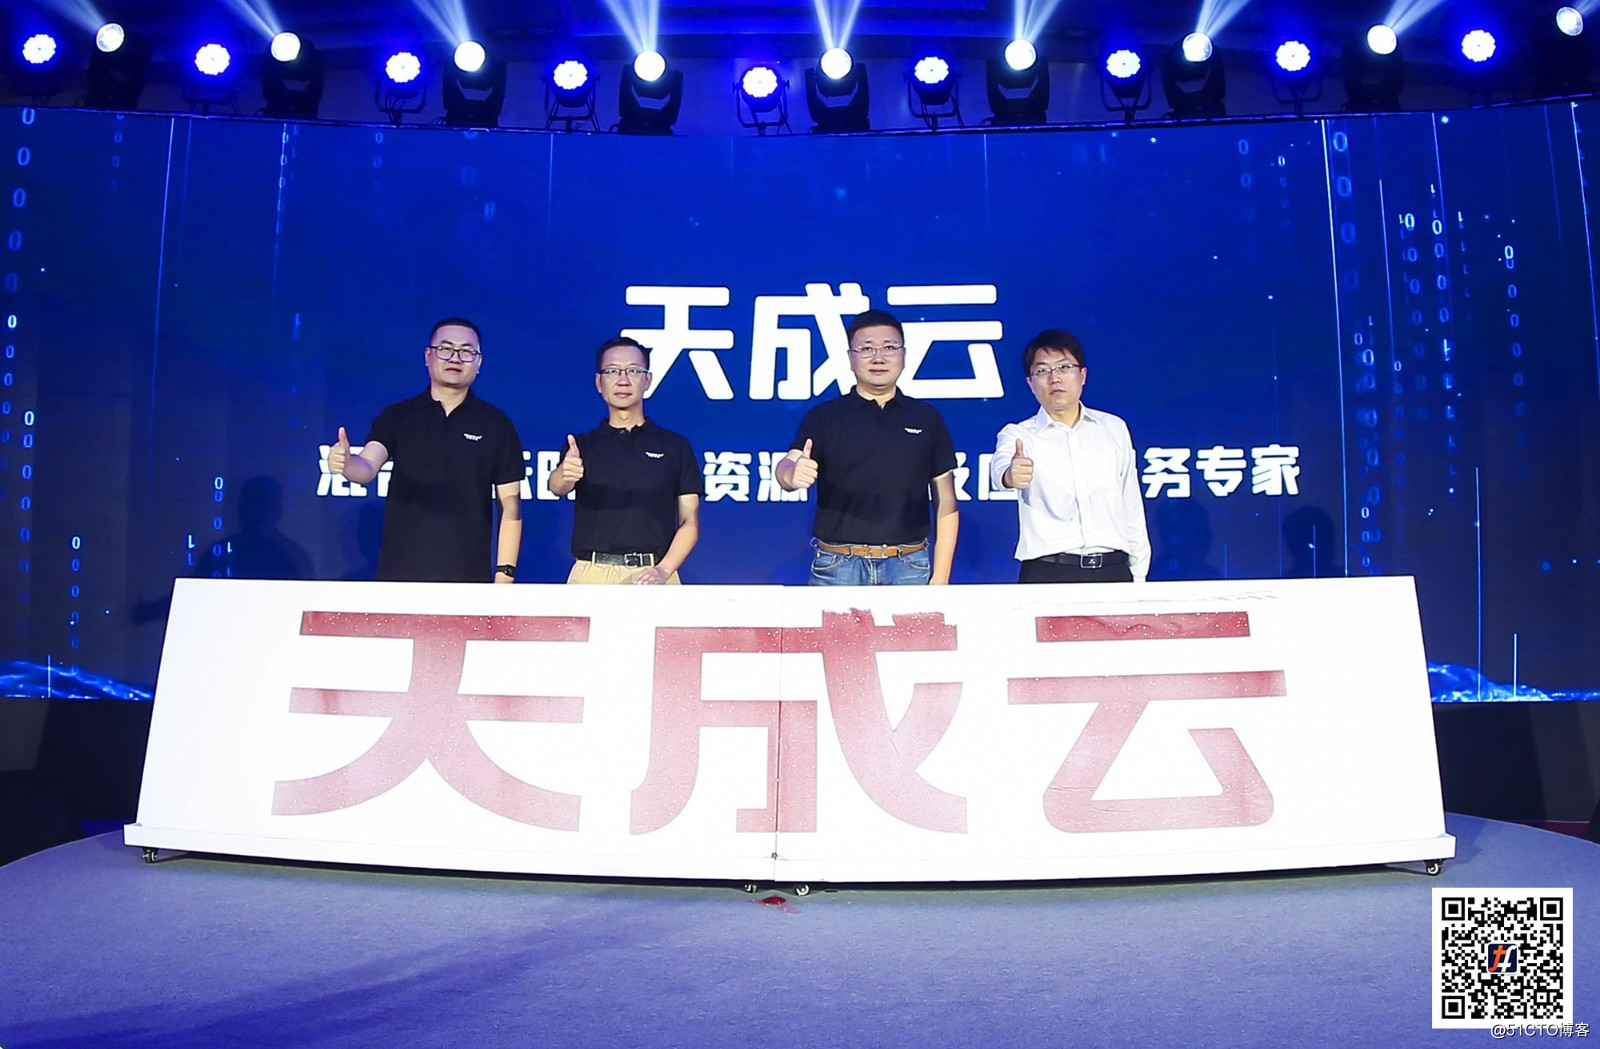 「Tiancheng Cloud」ブランドのリリース-タングステン生地はオープンソースとオープンな生態学的開発を支援します